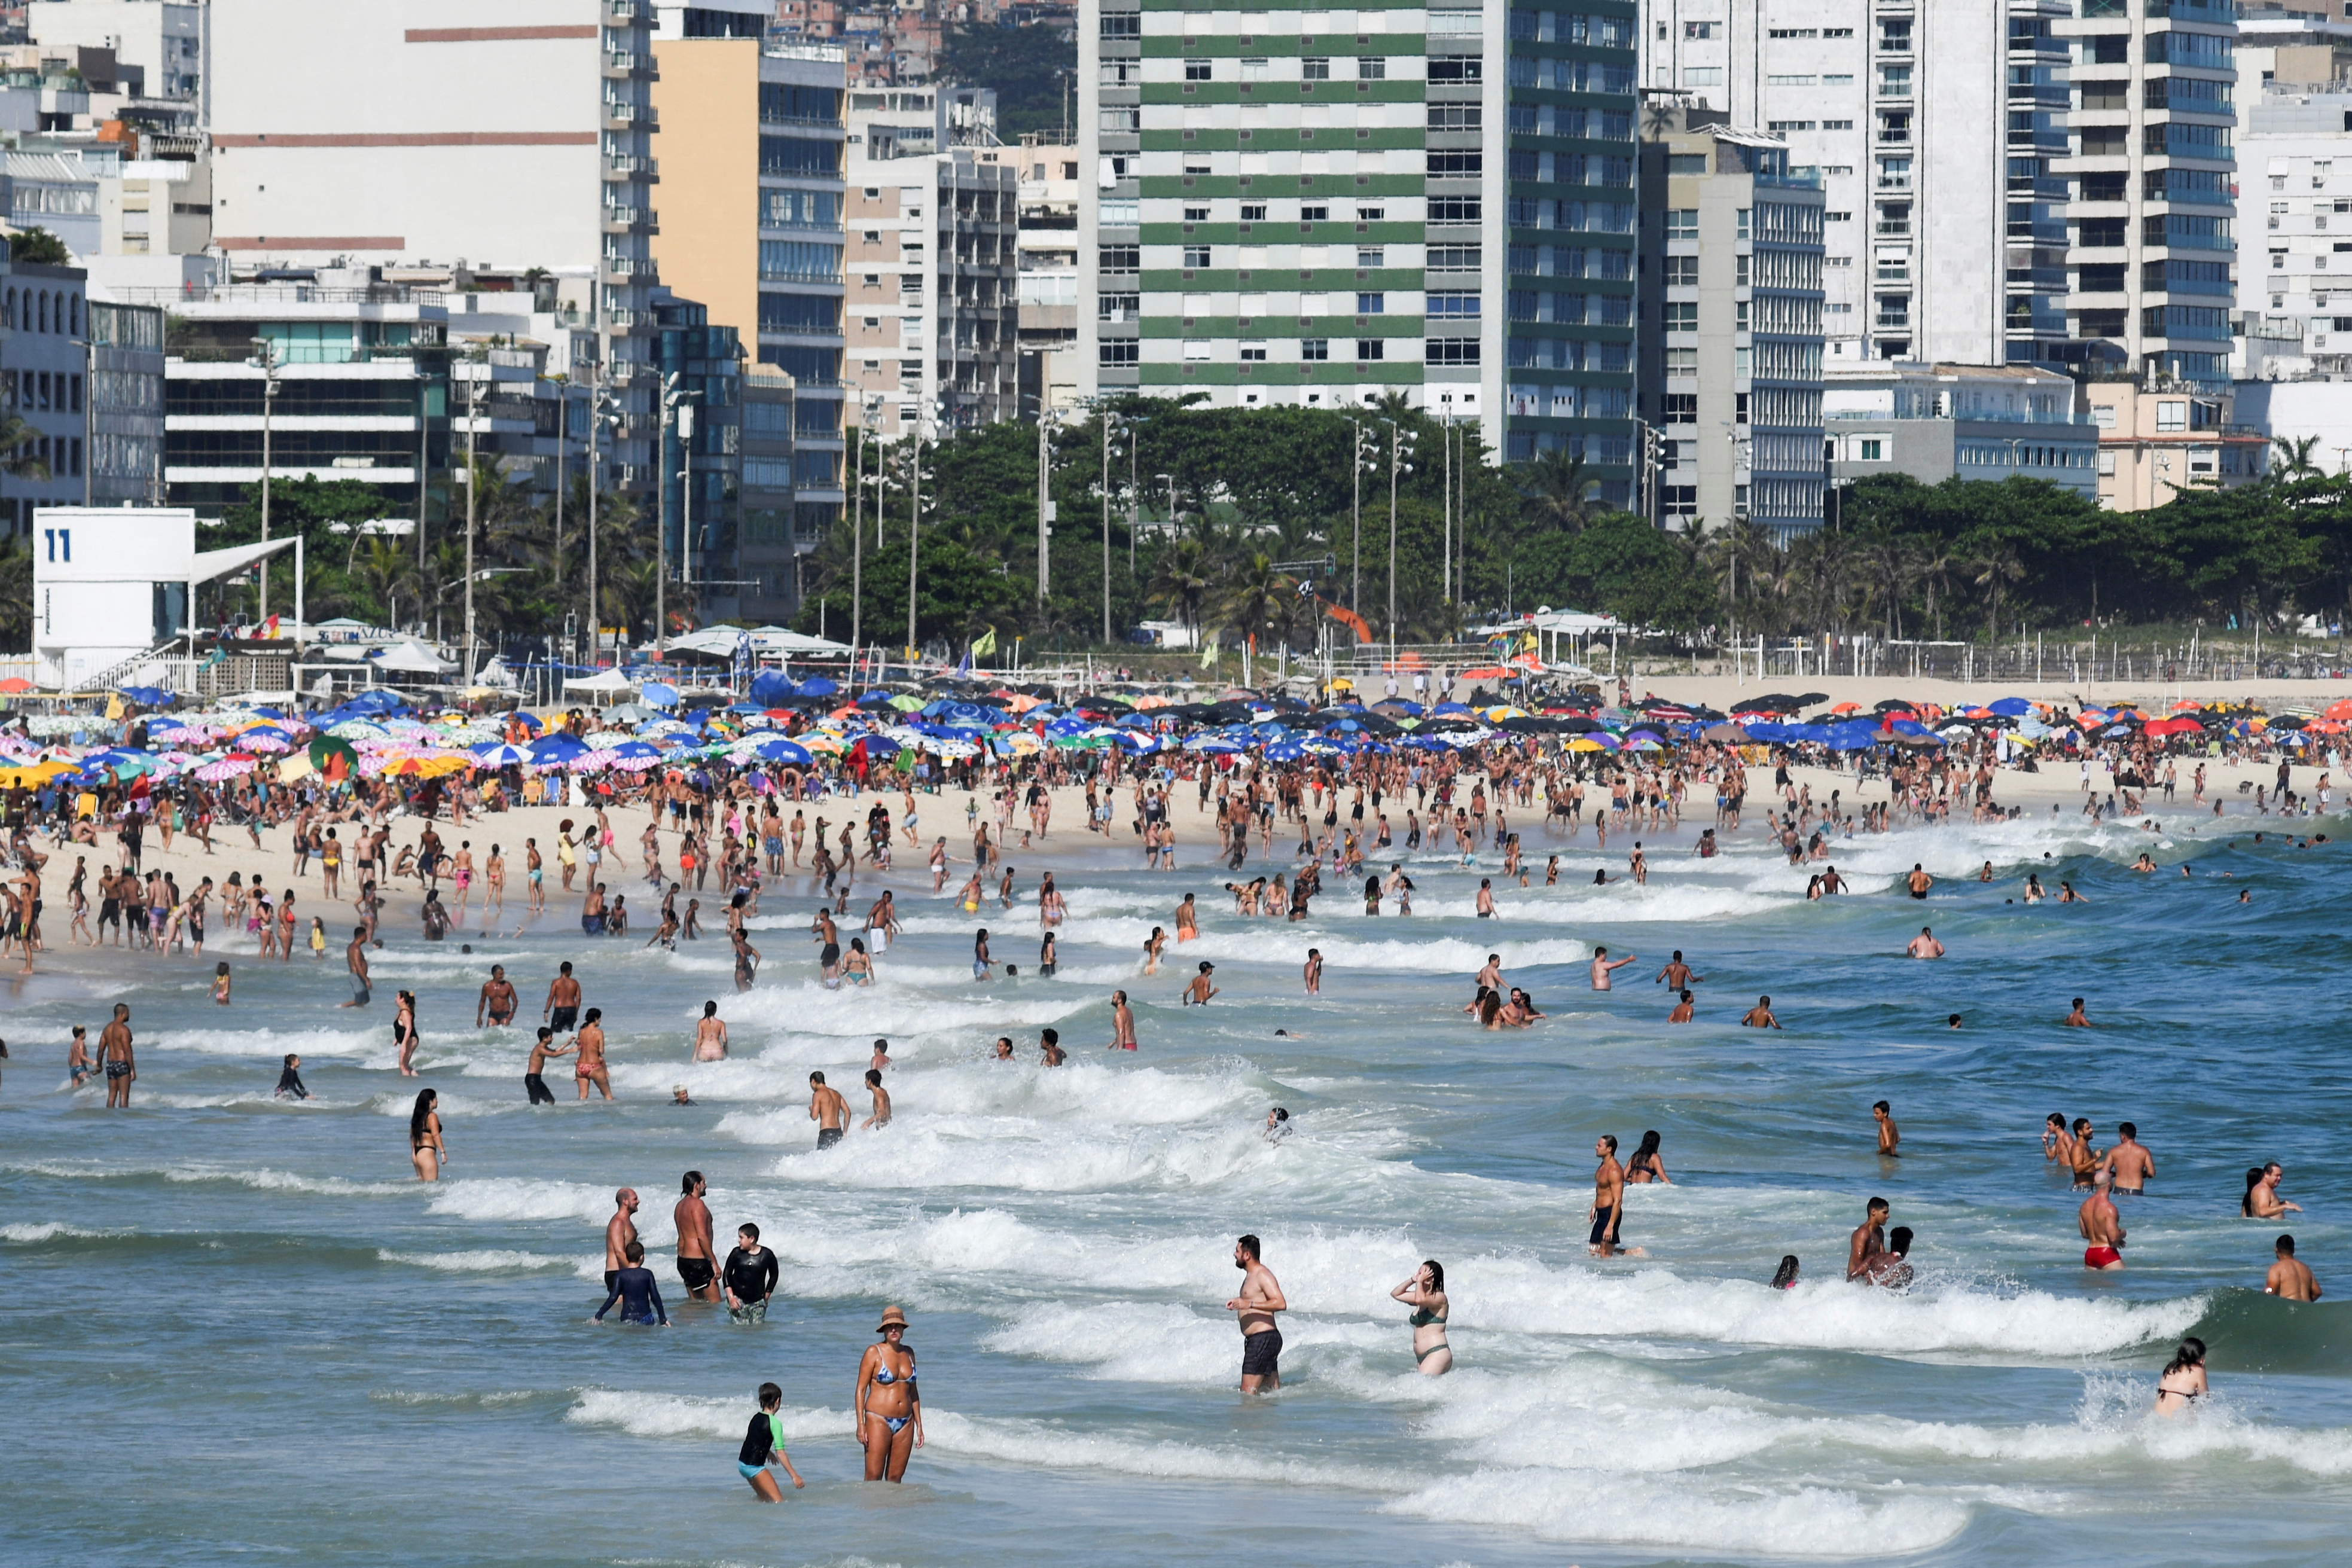 Beaches packed amid heatwave, spurring COVID fears in Rio de Janeiro